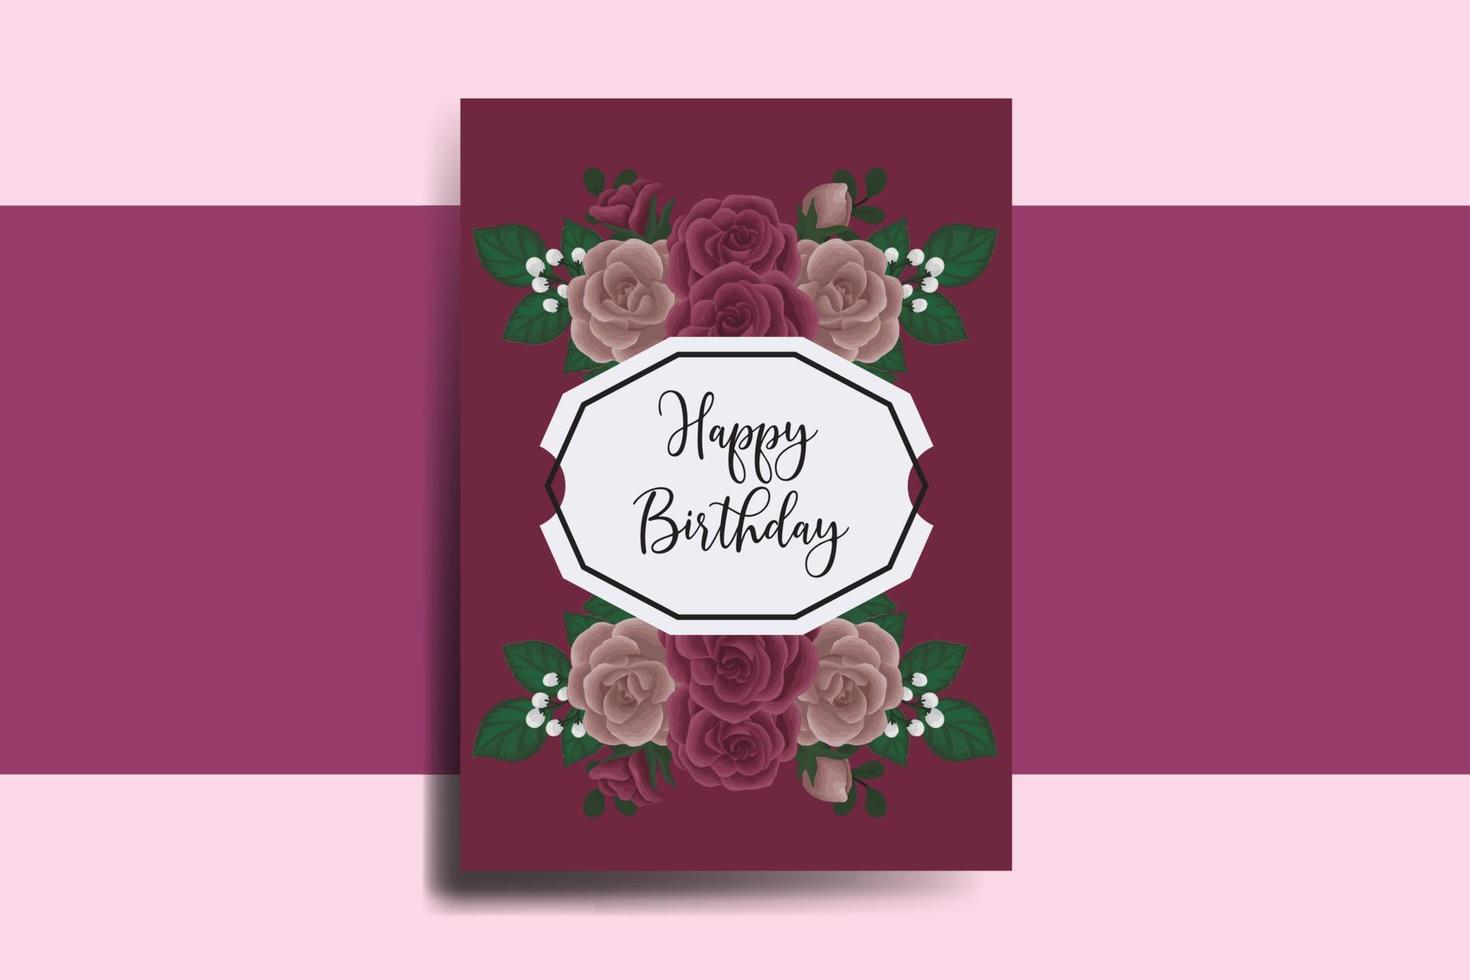 saludo tarjeta cumpleaños tarjeta digital acuarela mano dibujado granate Rosa flor diseño modelo vector